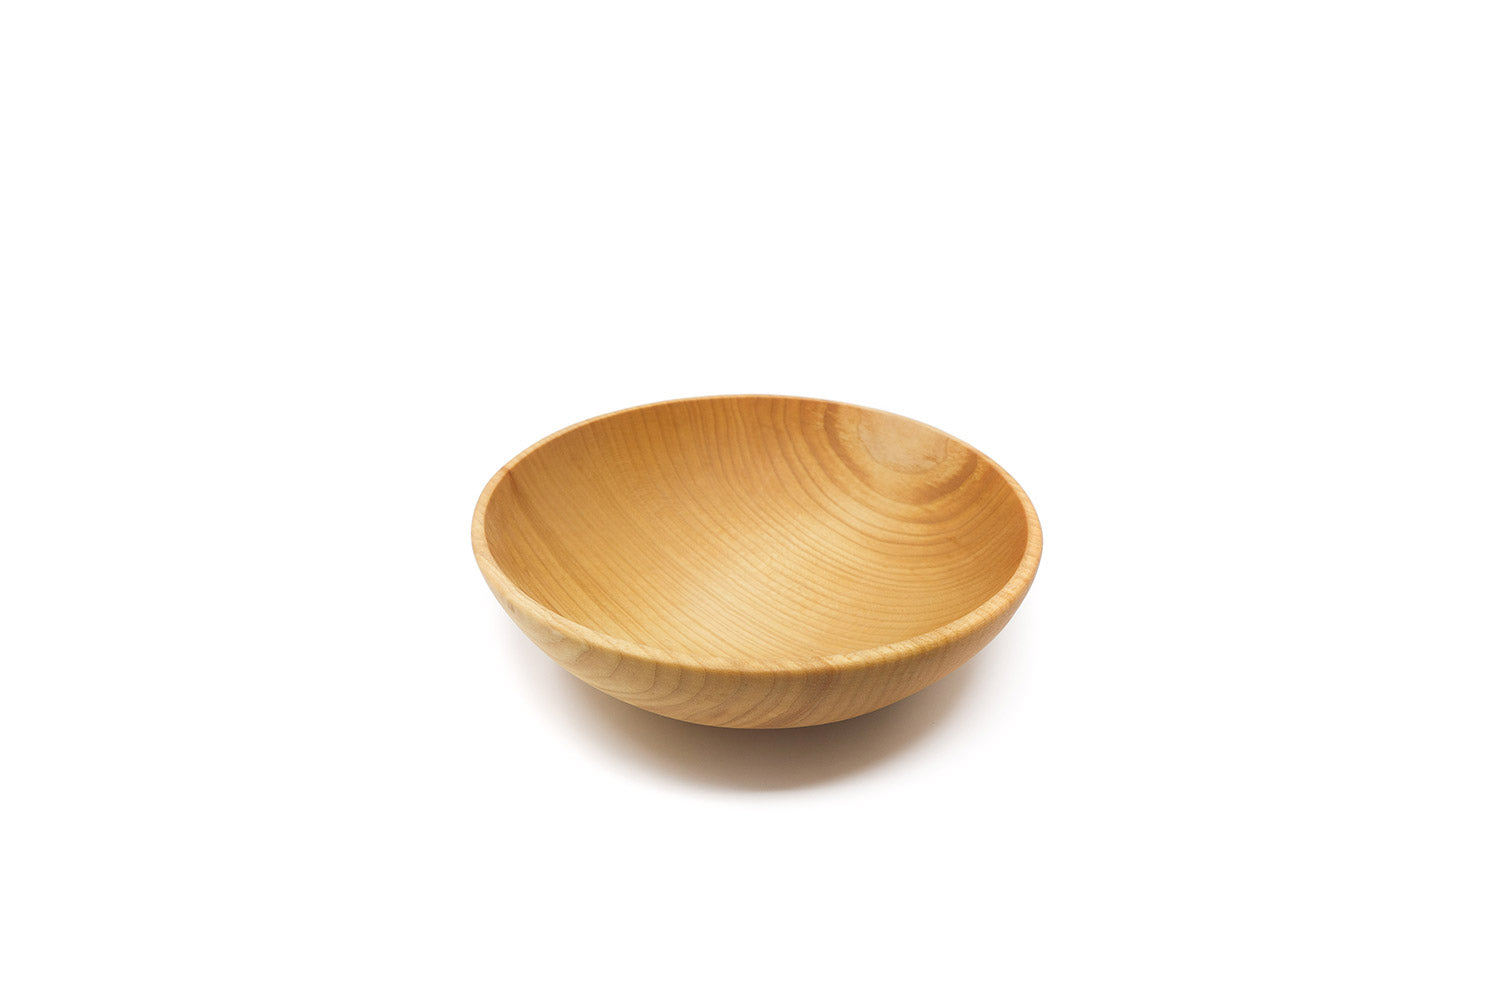 wooden salad bowl on white background